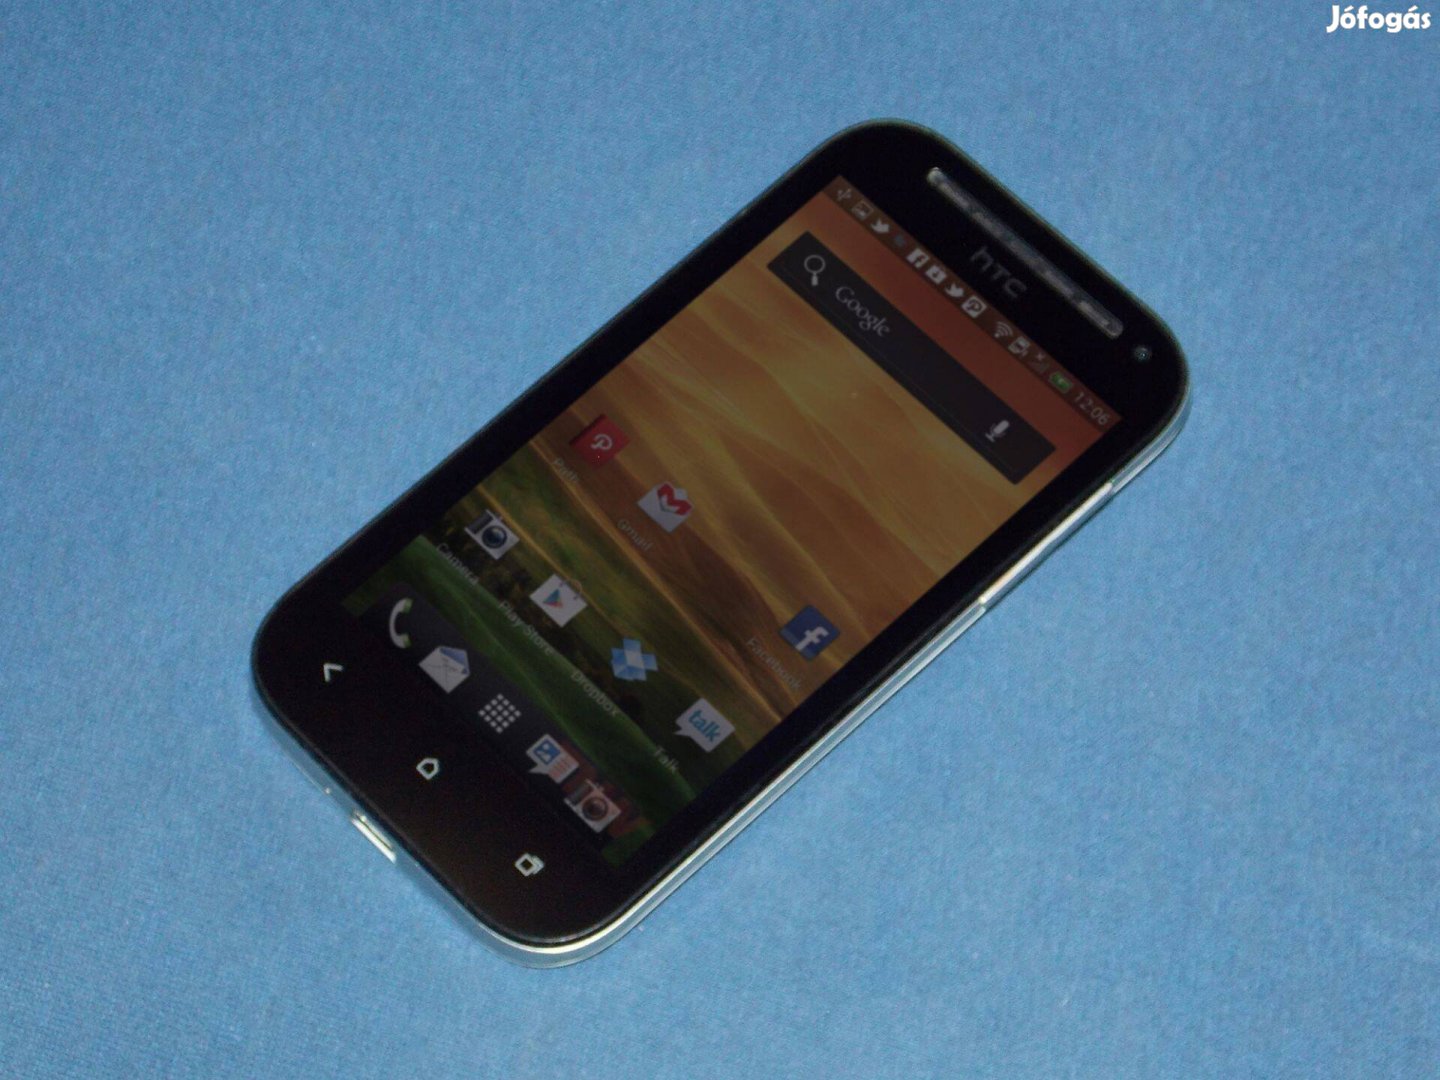 HTC One SV 4G LTE telefon